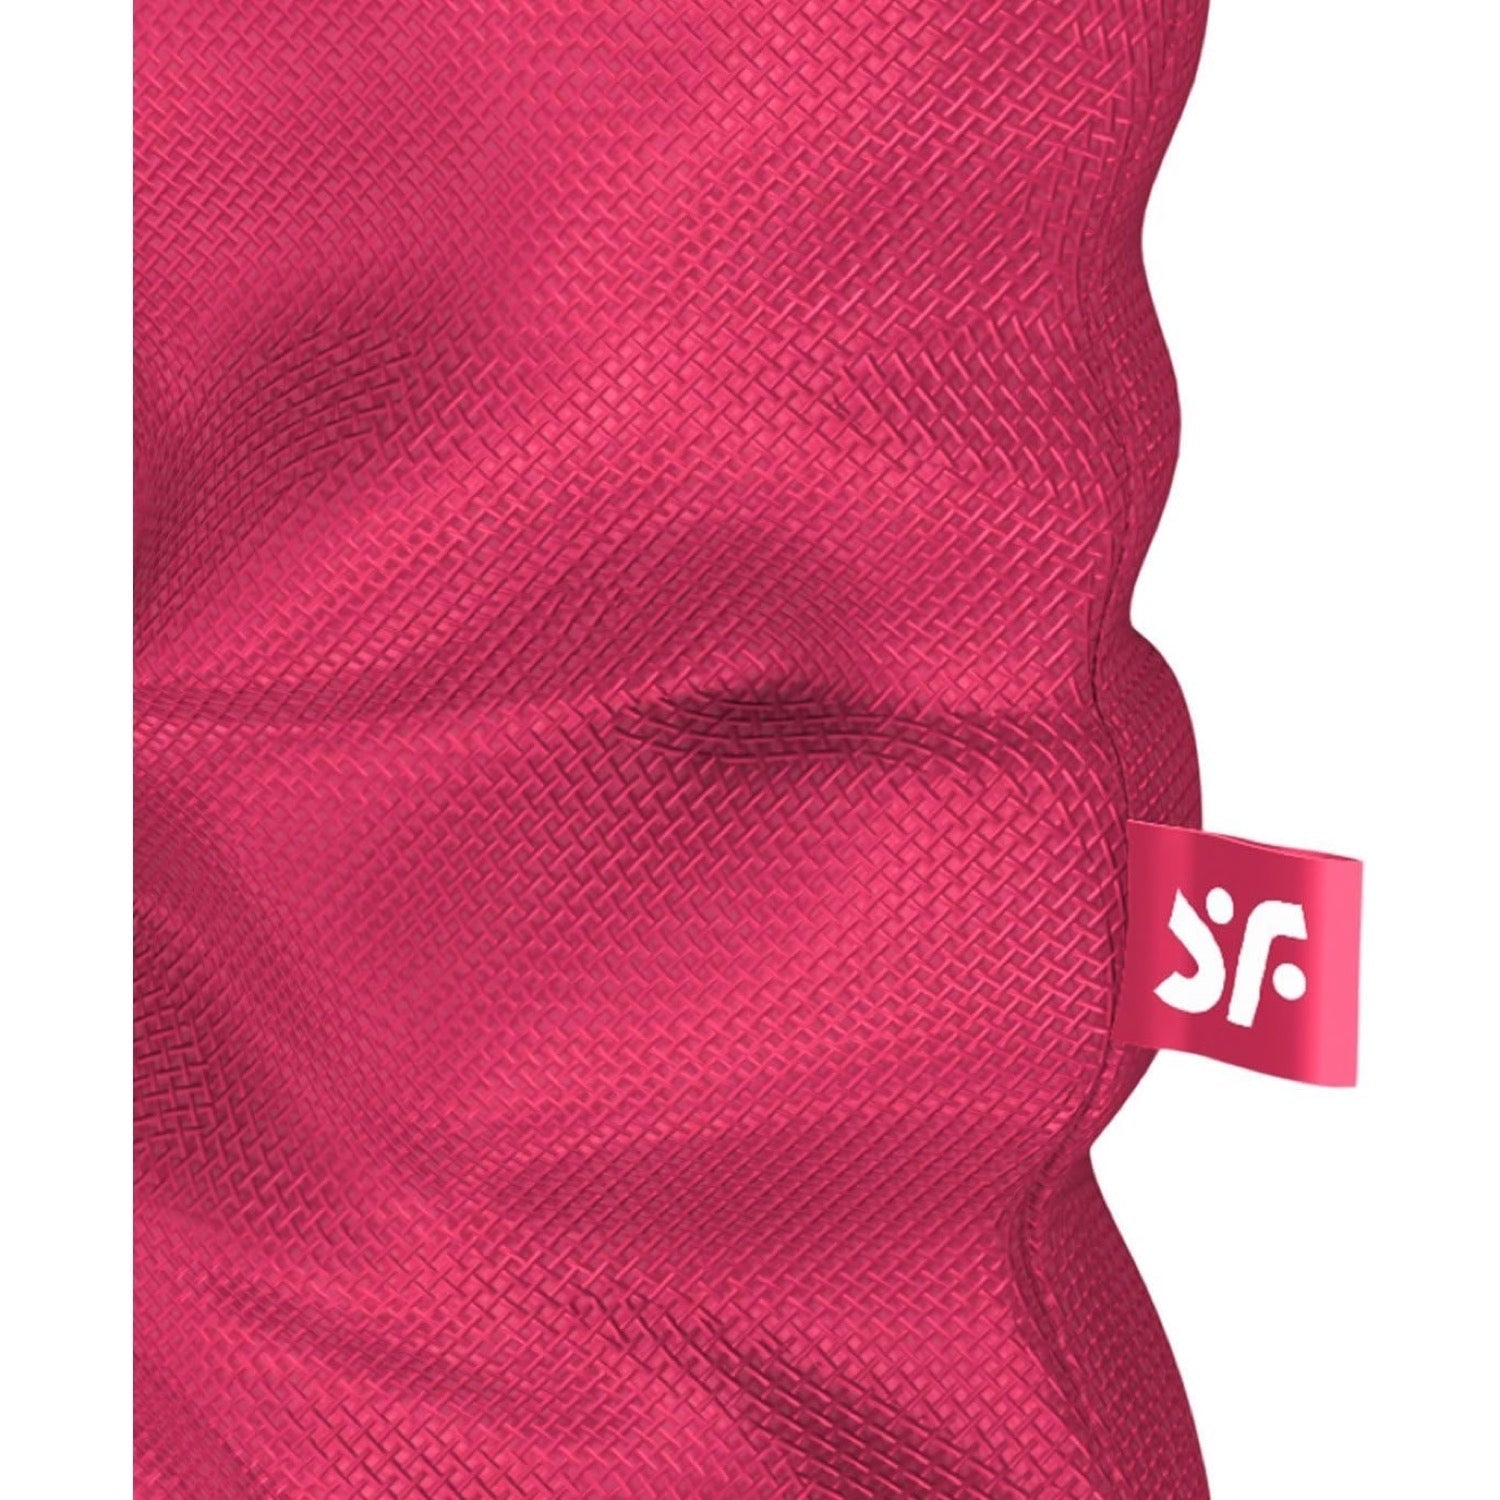 संतुष्ट करनेवाला खजाना बैग XLarge - गुलाबी by Satisfyer